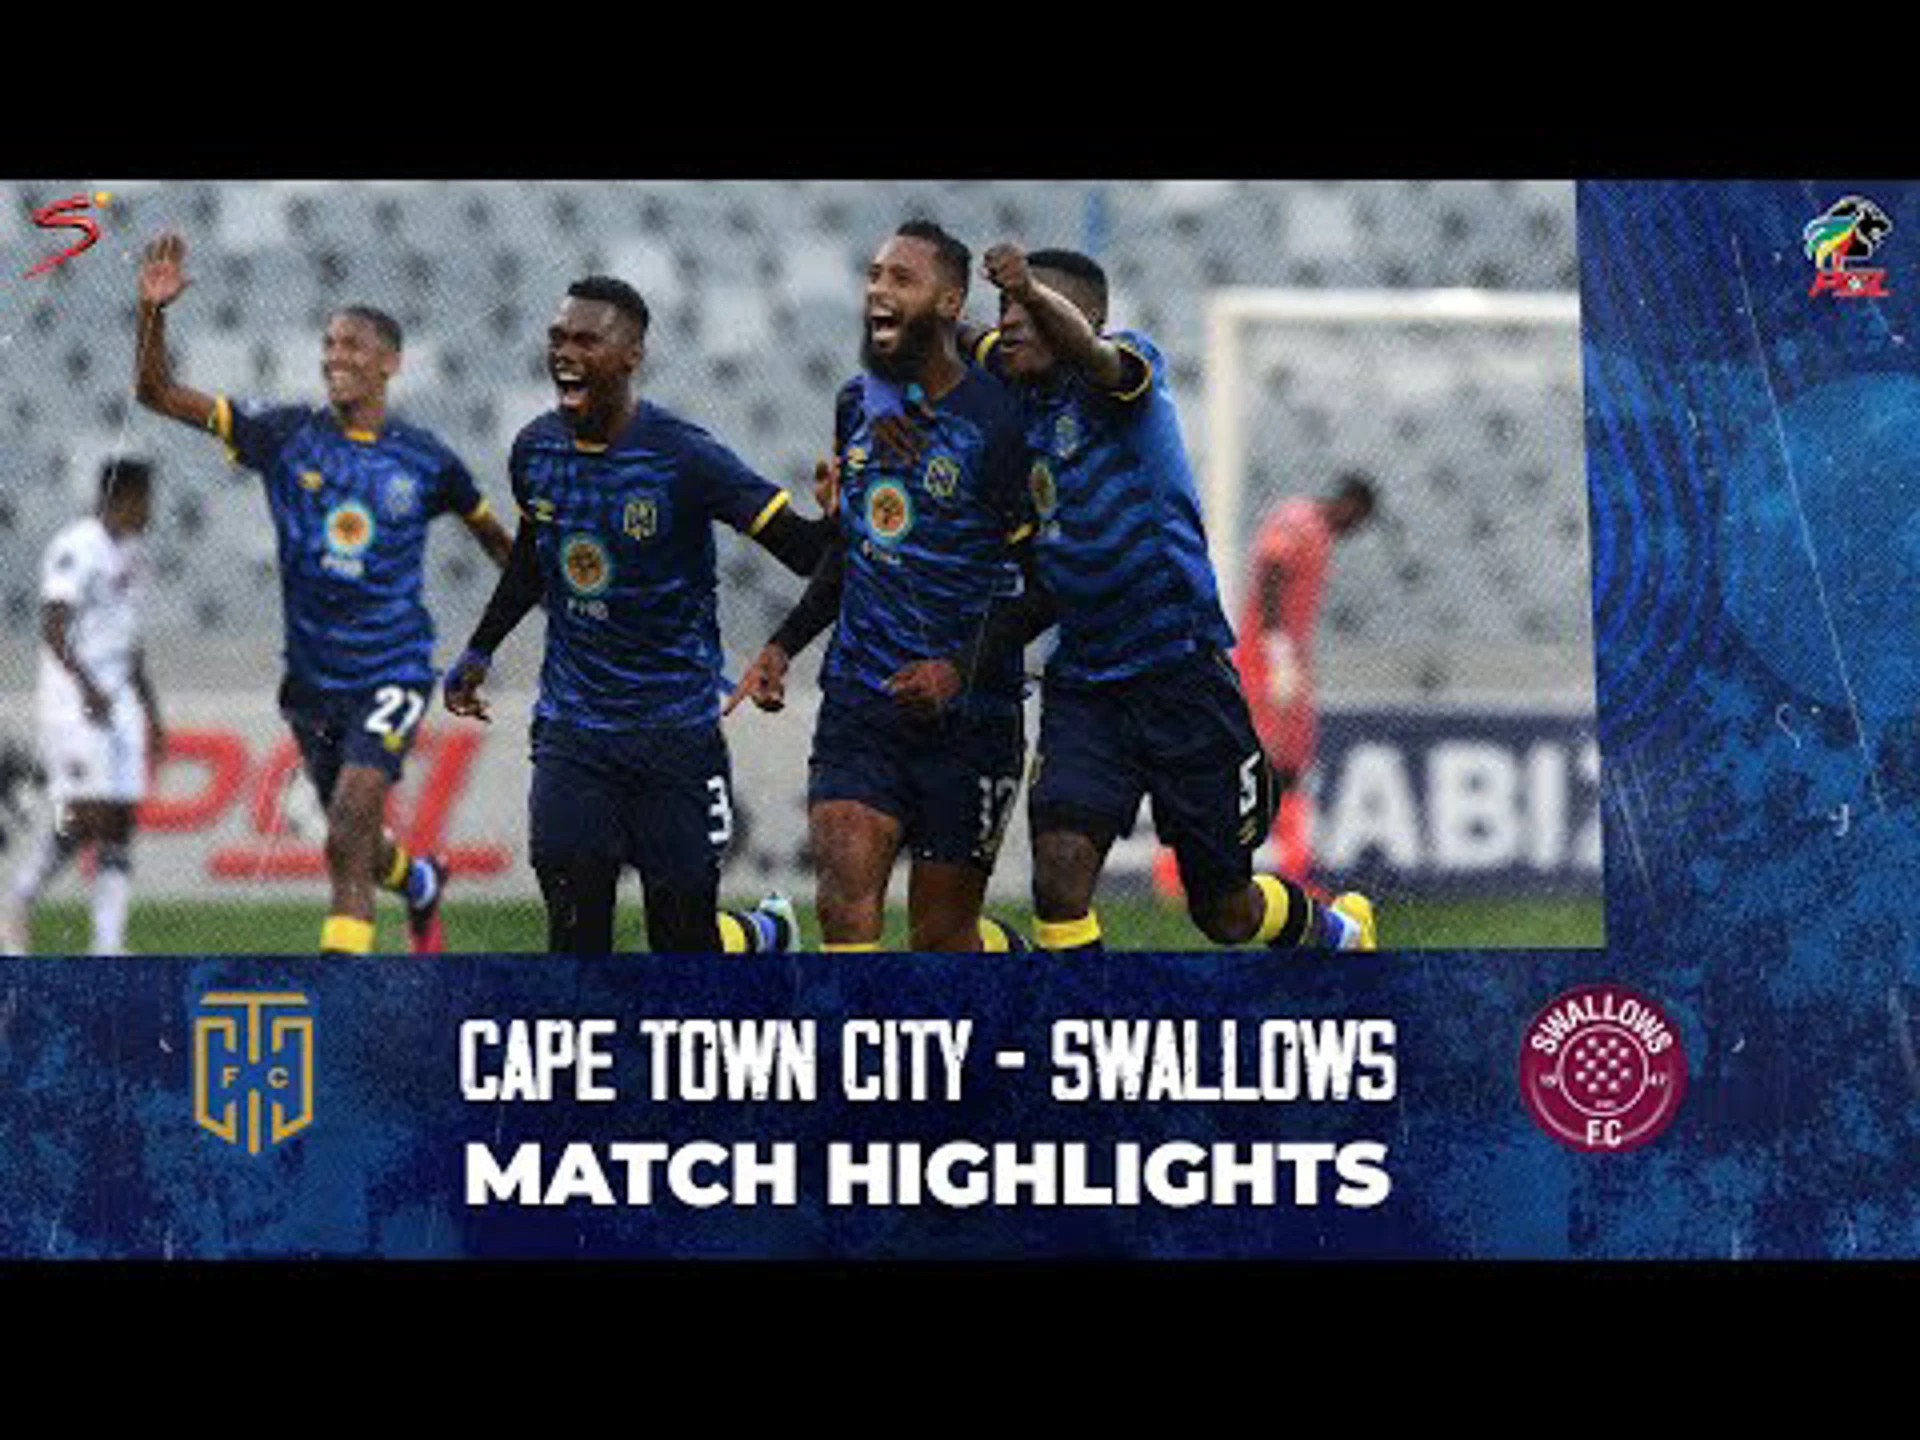 DStv Premiership | Cape Town City v Swallows FC | Highlights